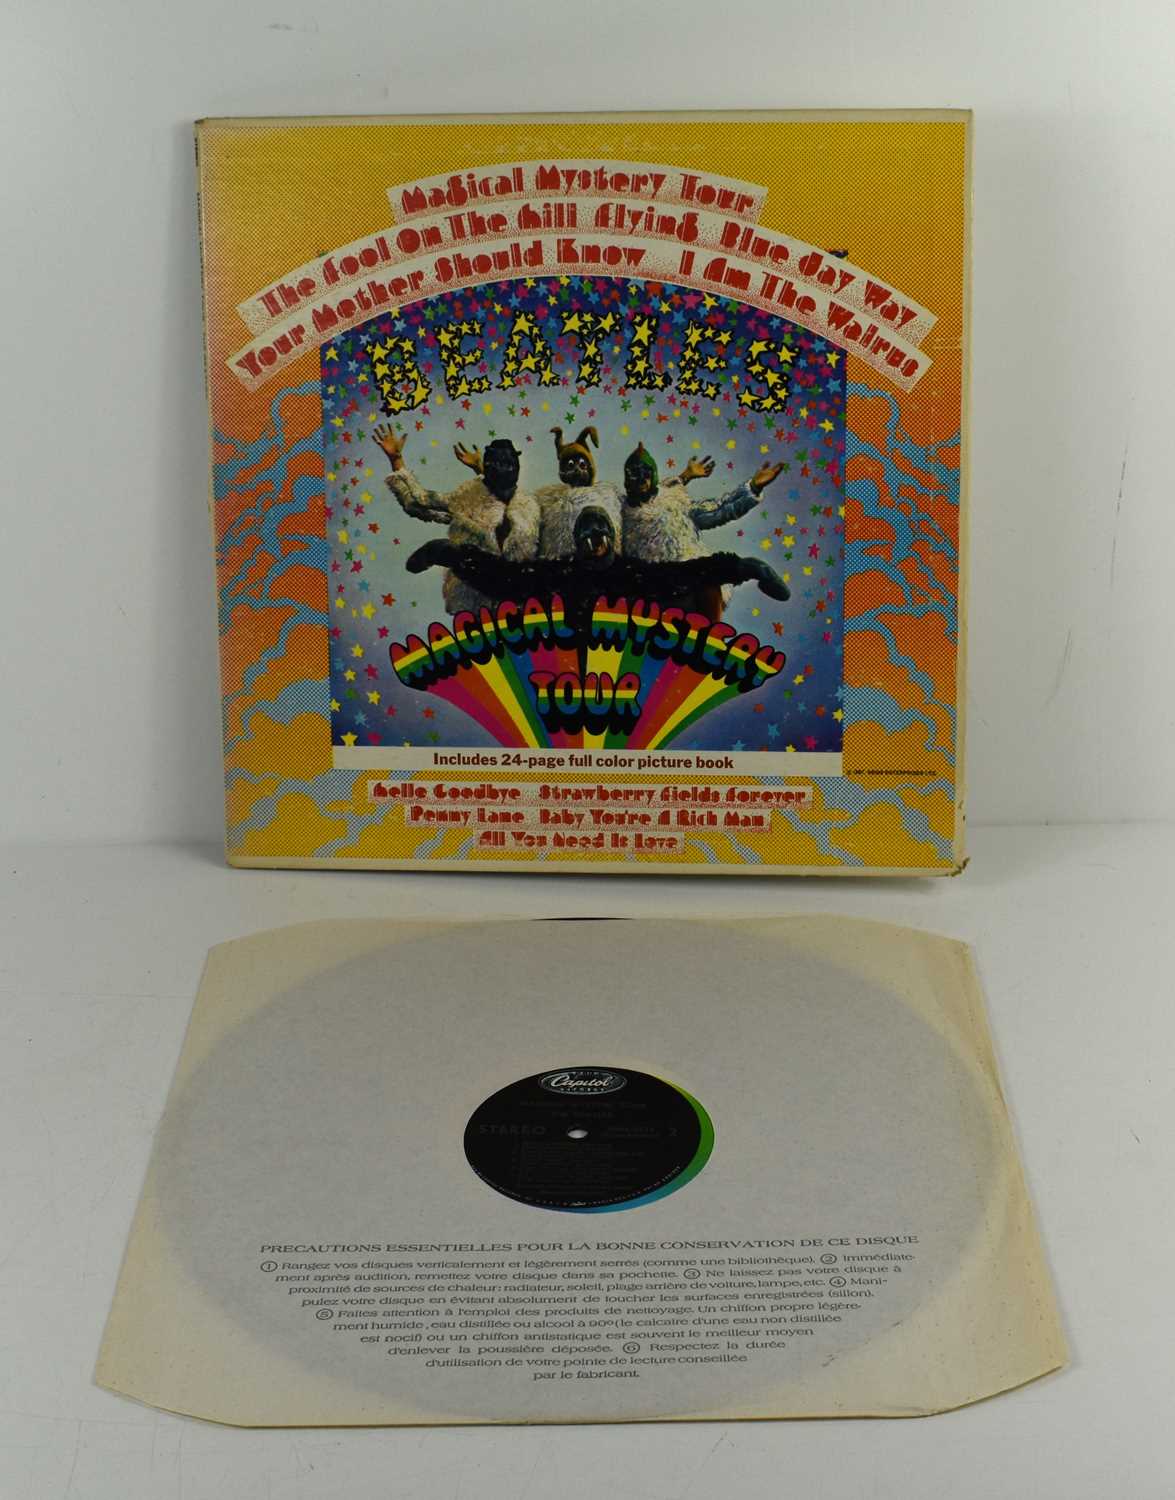 Lot 17 - The Beatles "Magical Mystery Tour" vinyl...